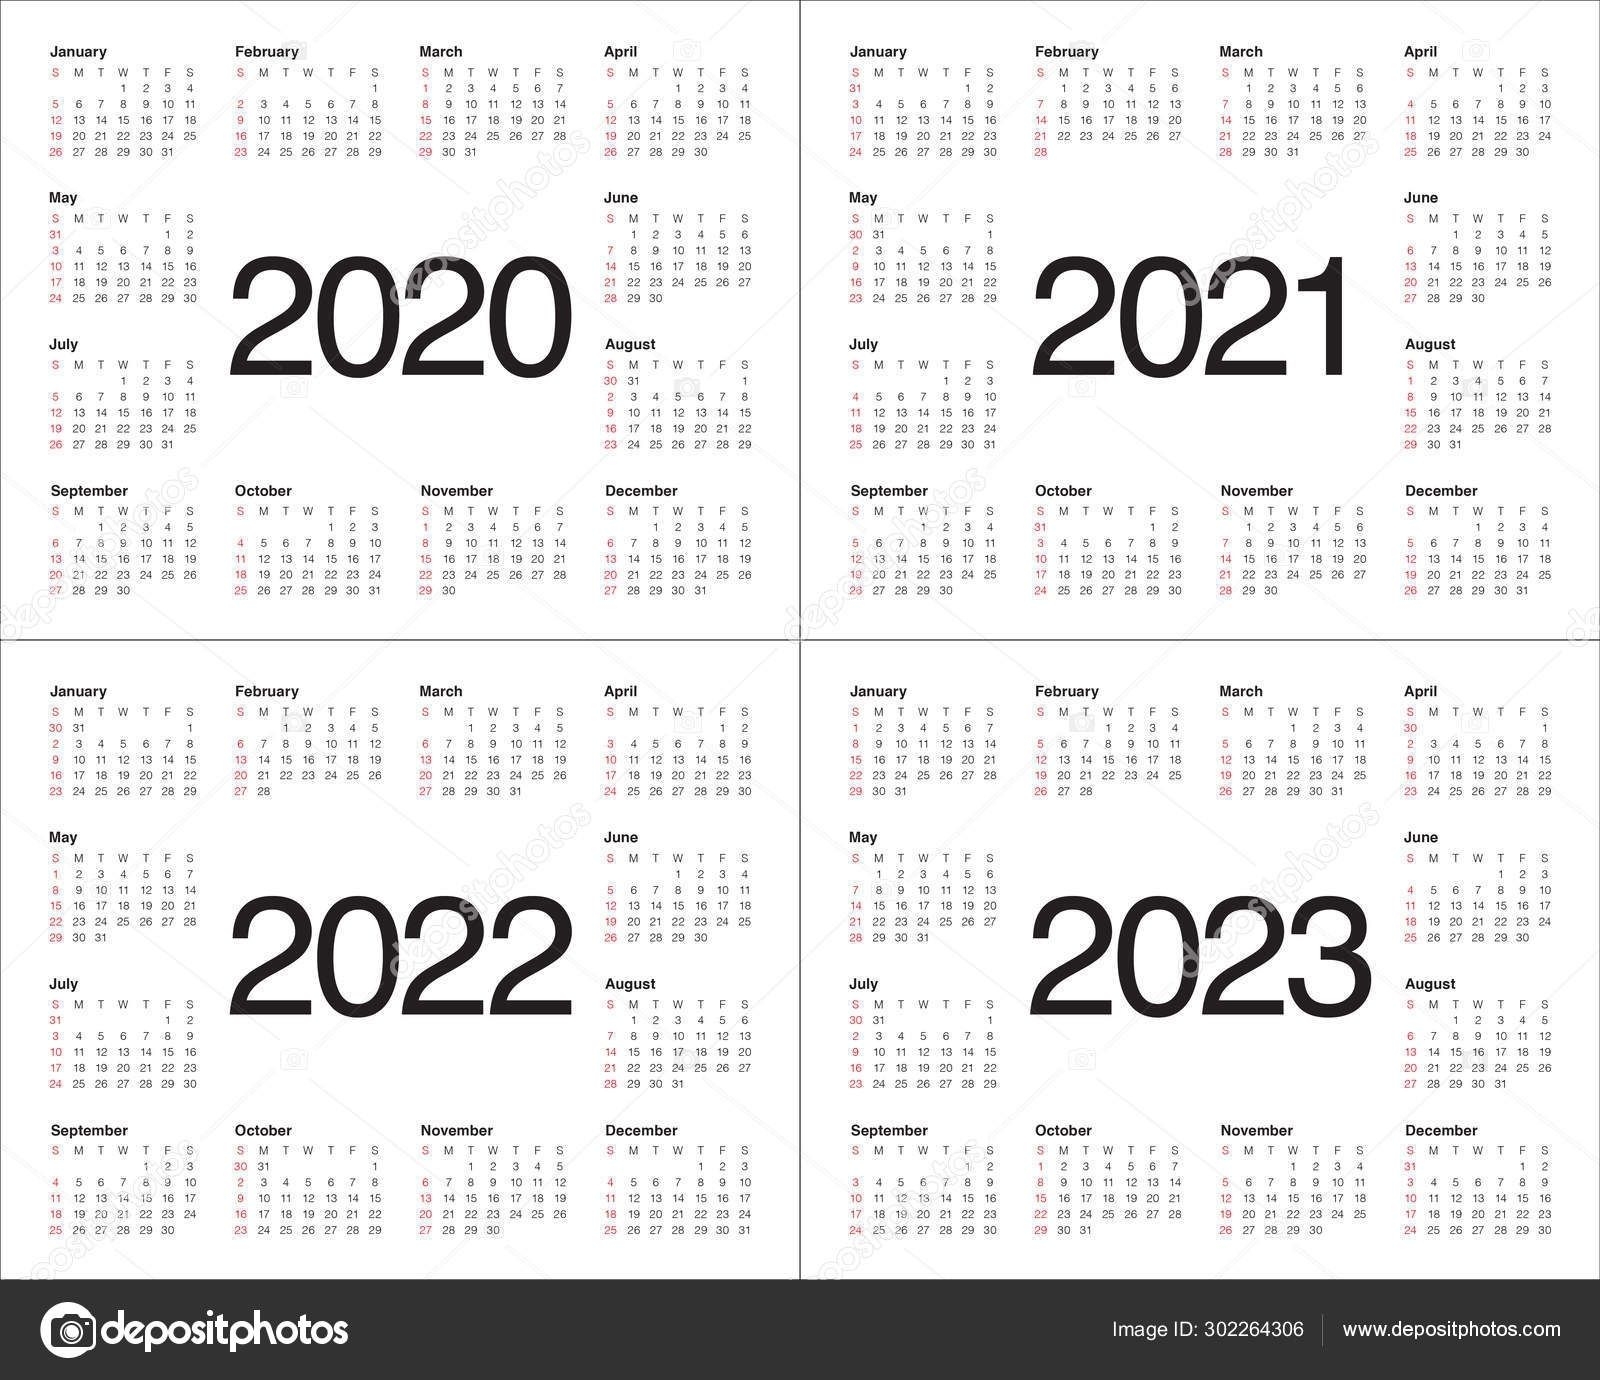 2021 2022 2023 2024 Calendar - 2022-2023 Two Year Calendar